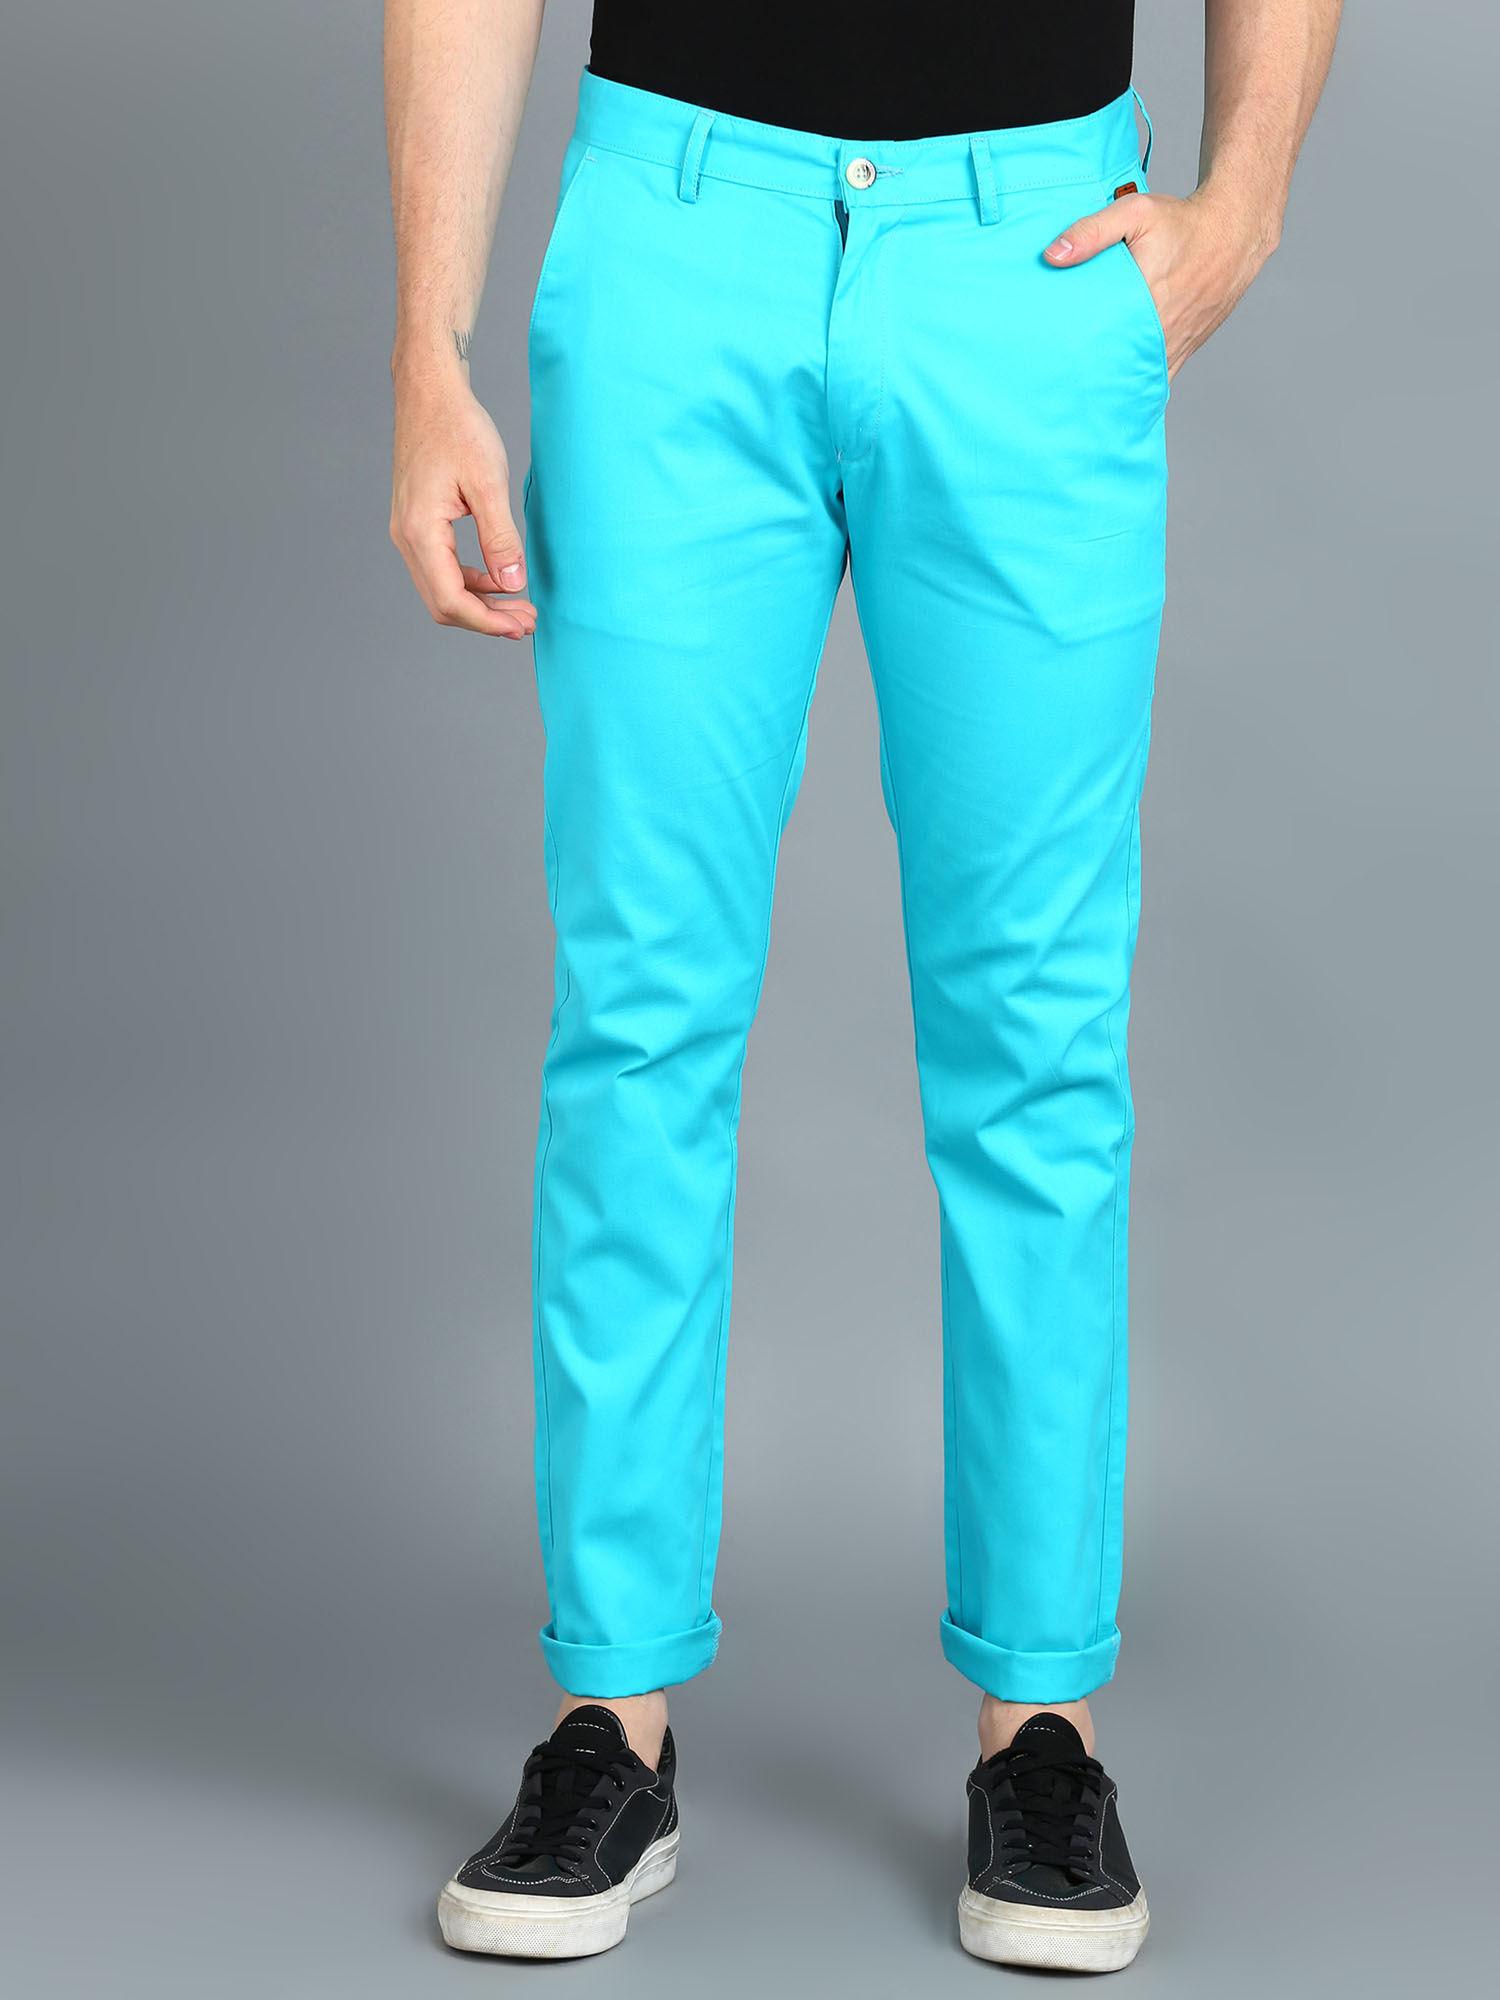 men-aqua-blue-cotton-slim-fit-casual-chinos-trousers